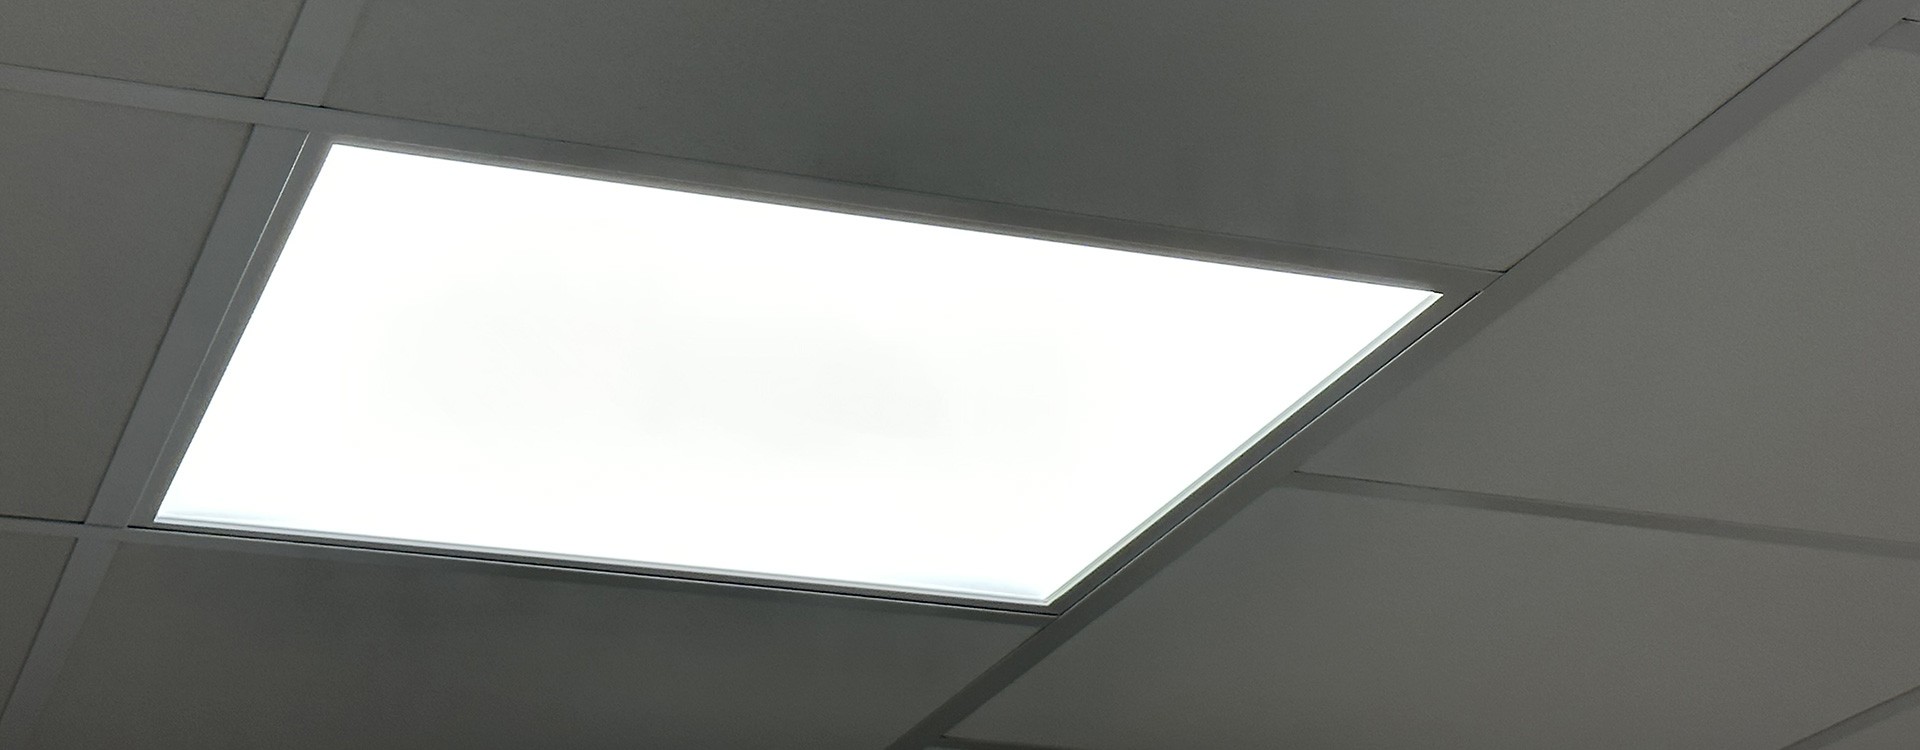 Dalle LED plafond lumineuse professionnelle